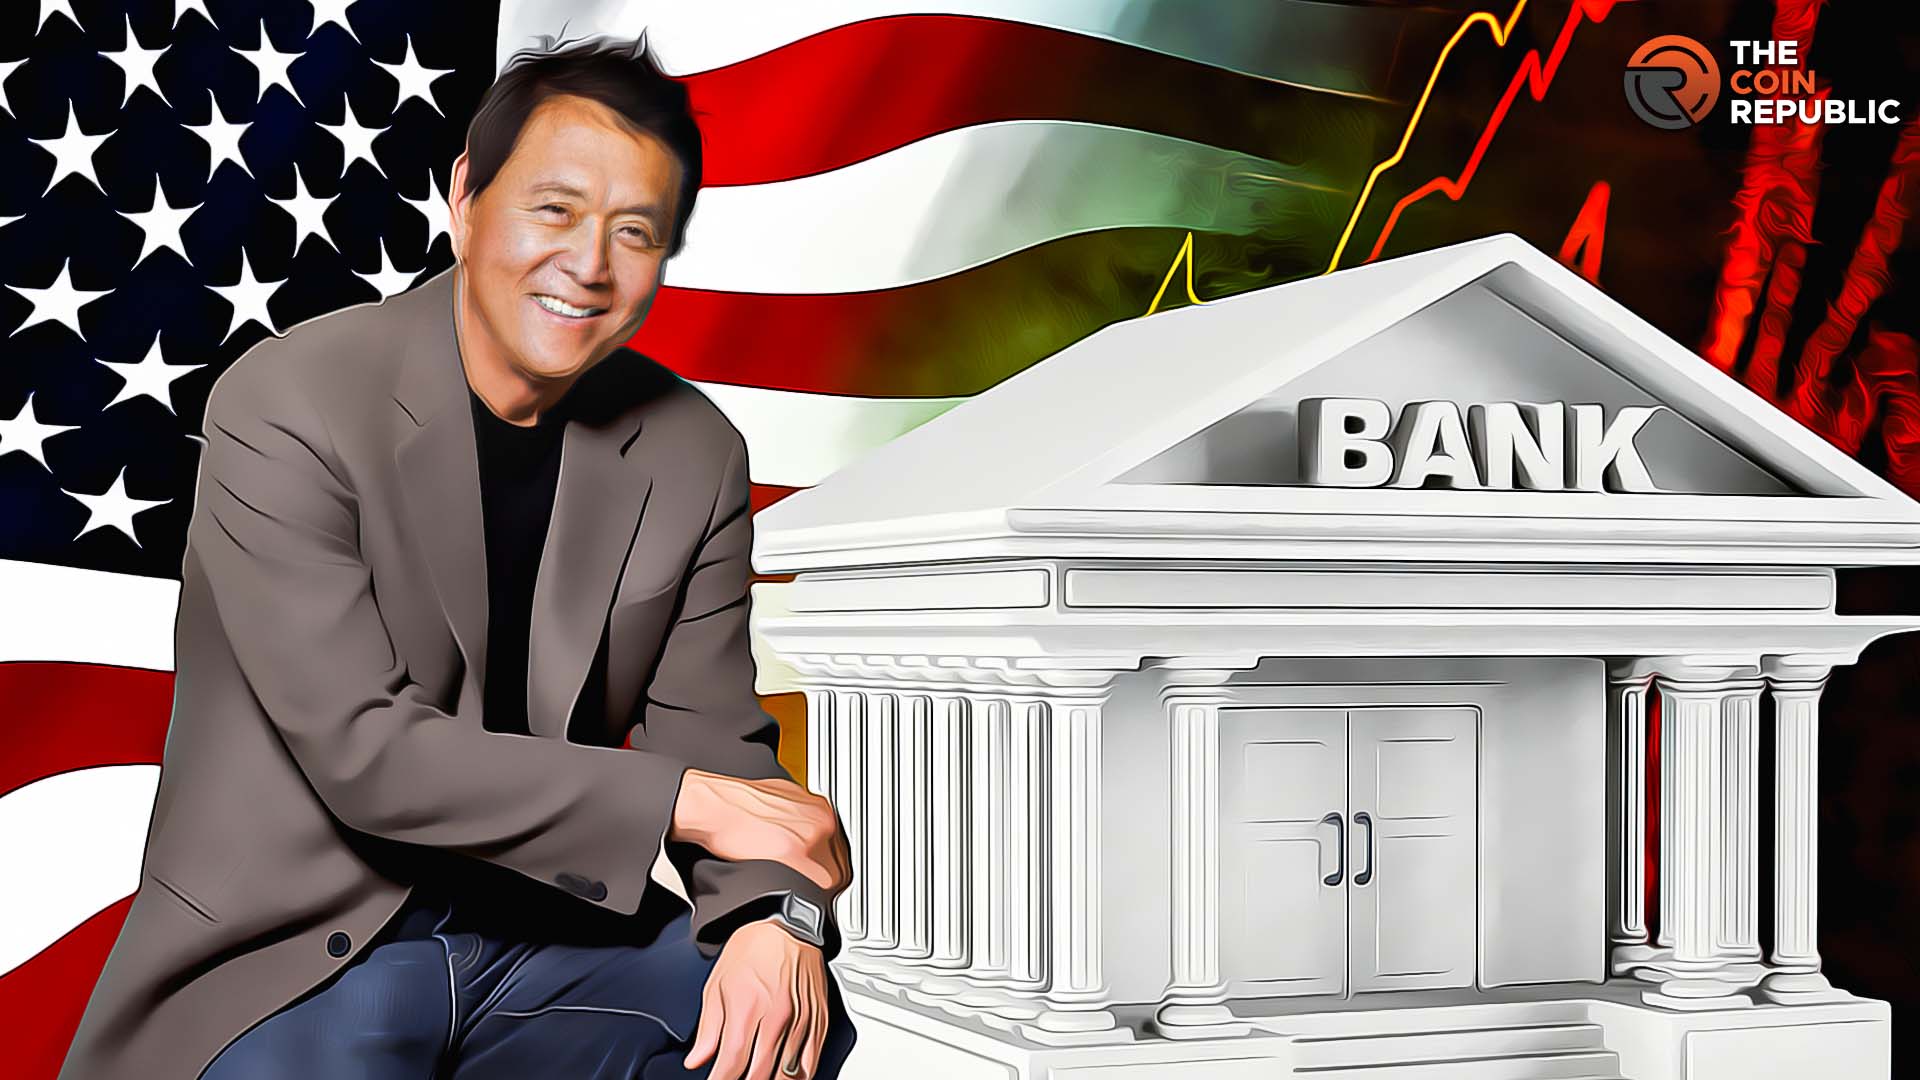 Famous Author Robert Kiyosaki Warns More Banks About to Fail